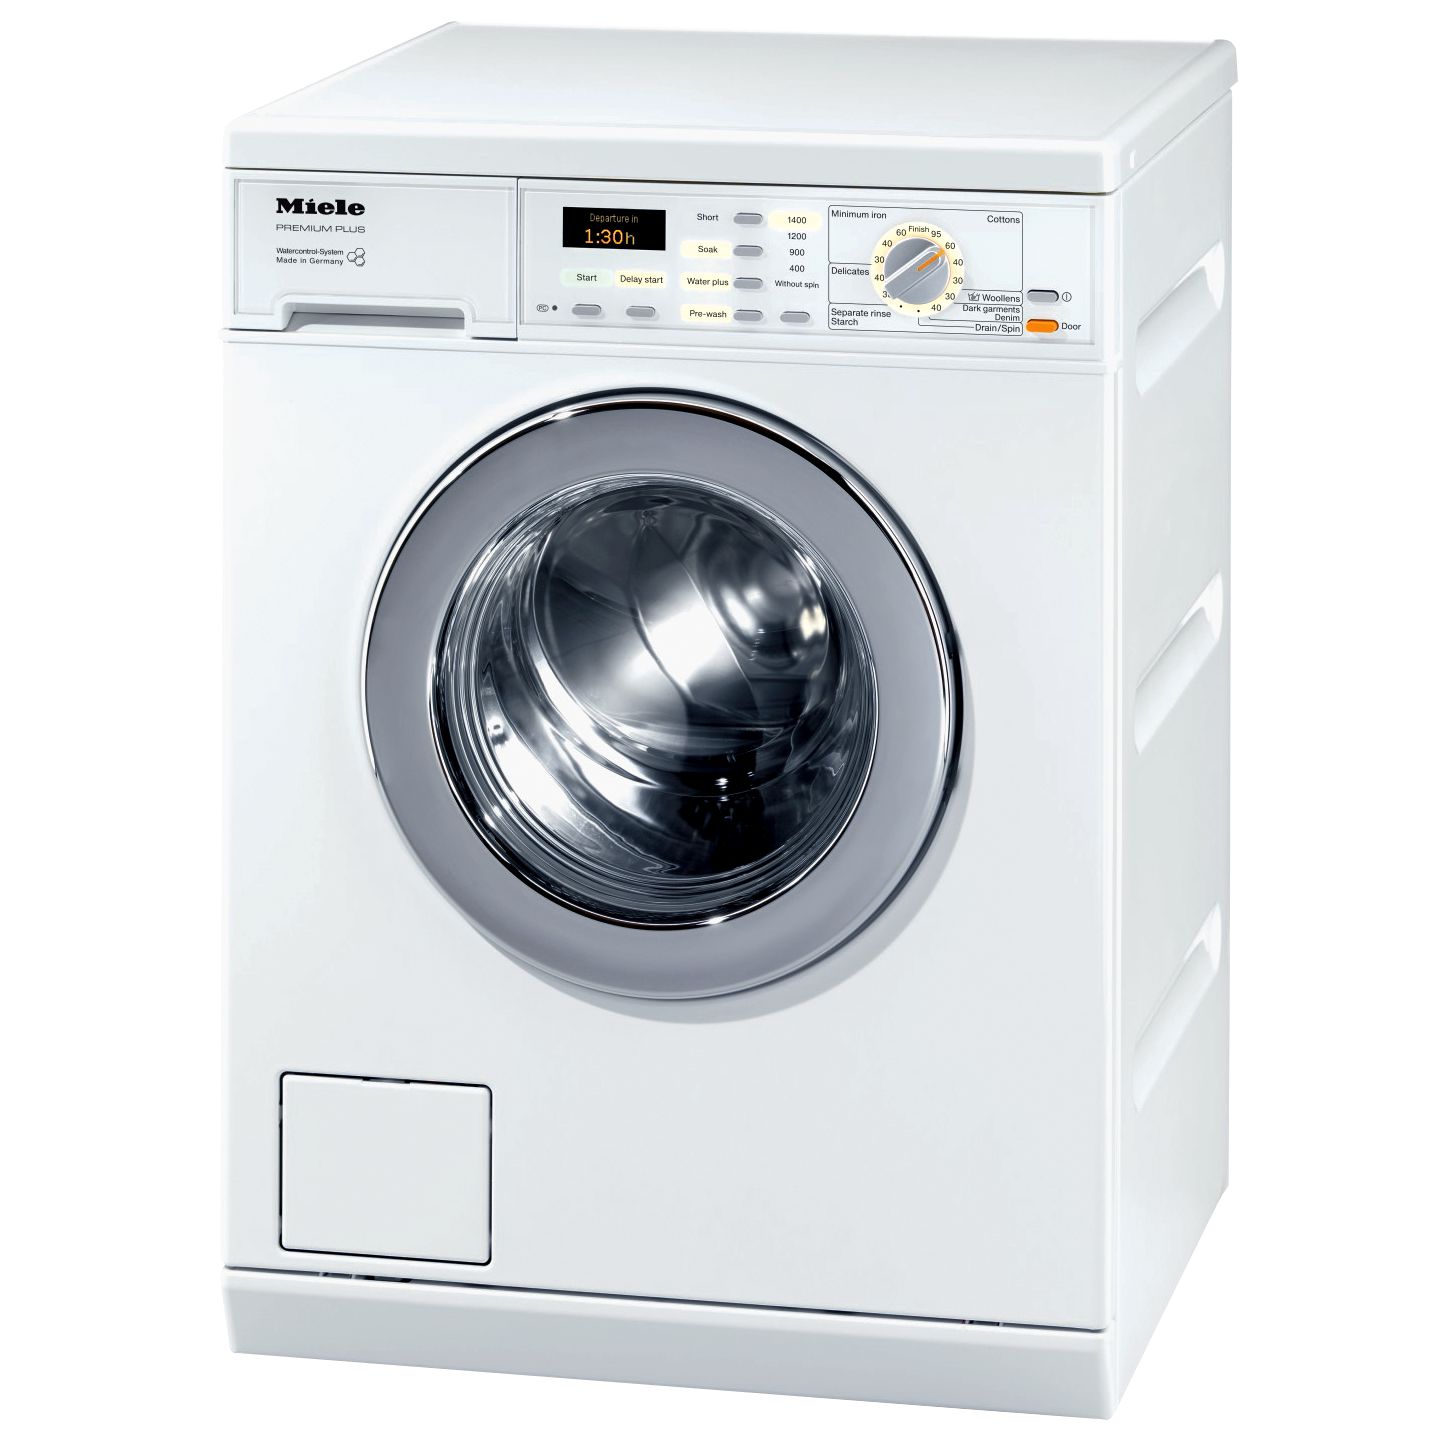 Miele W5902 Premium Plus Washing Machine, White at John Lewis